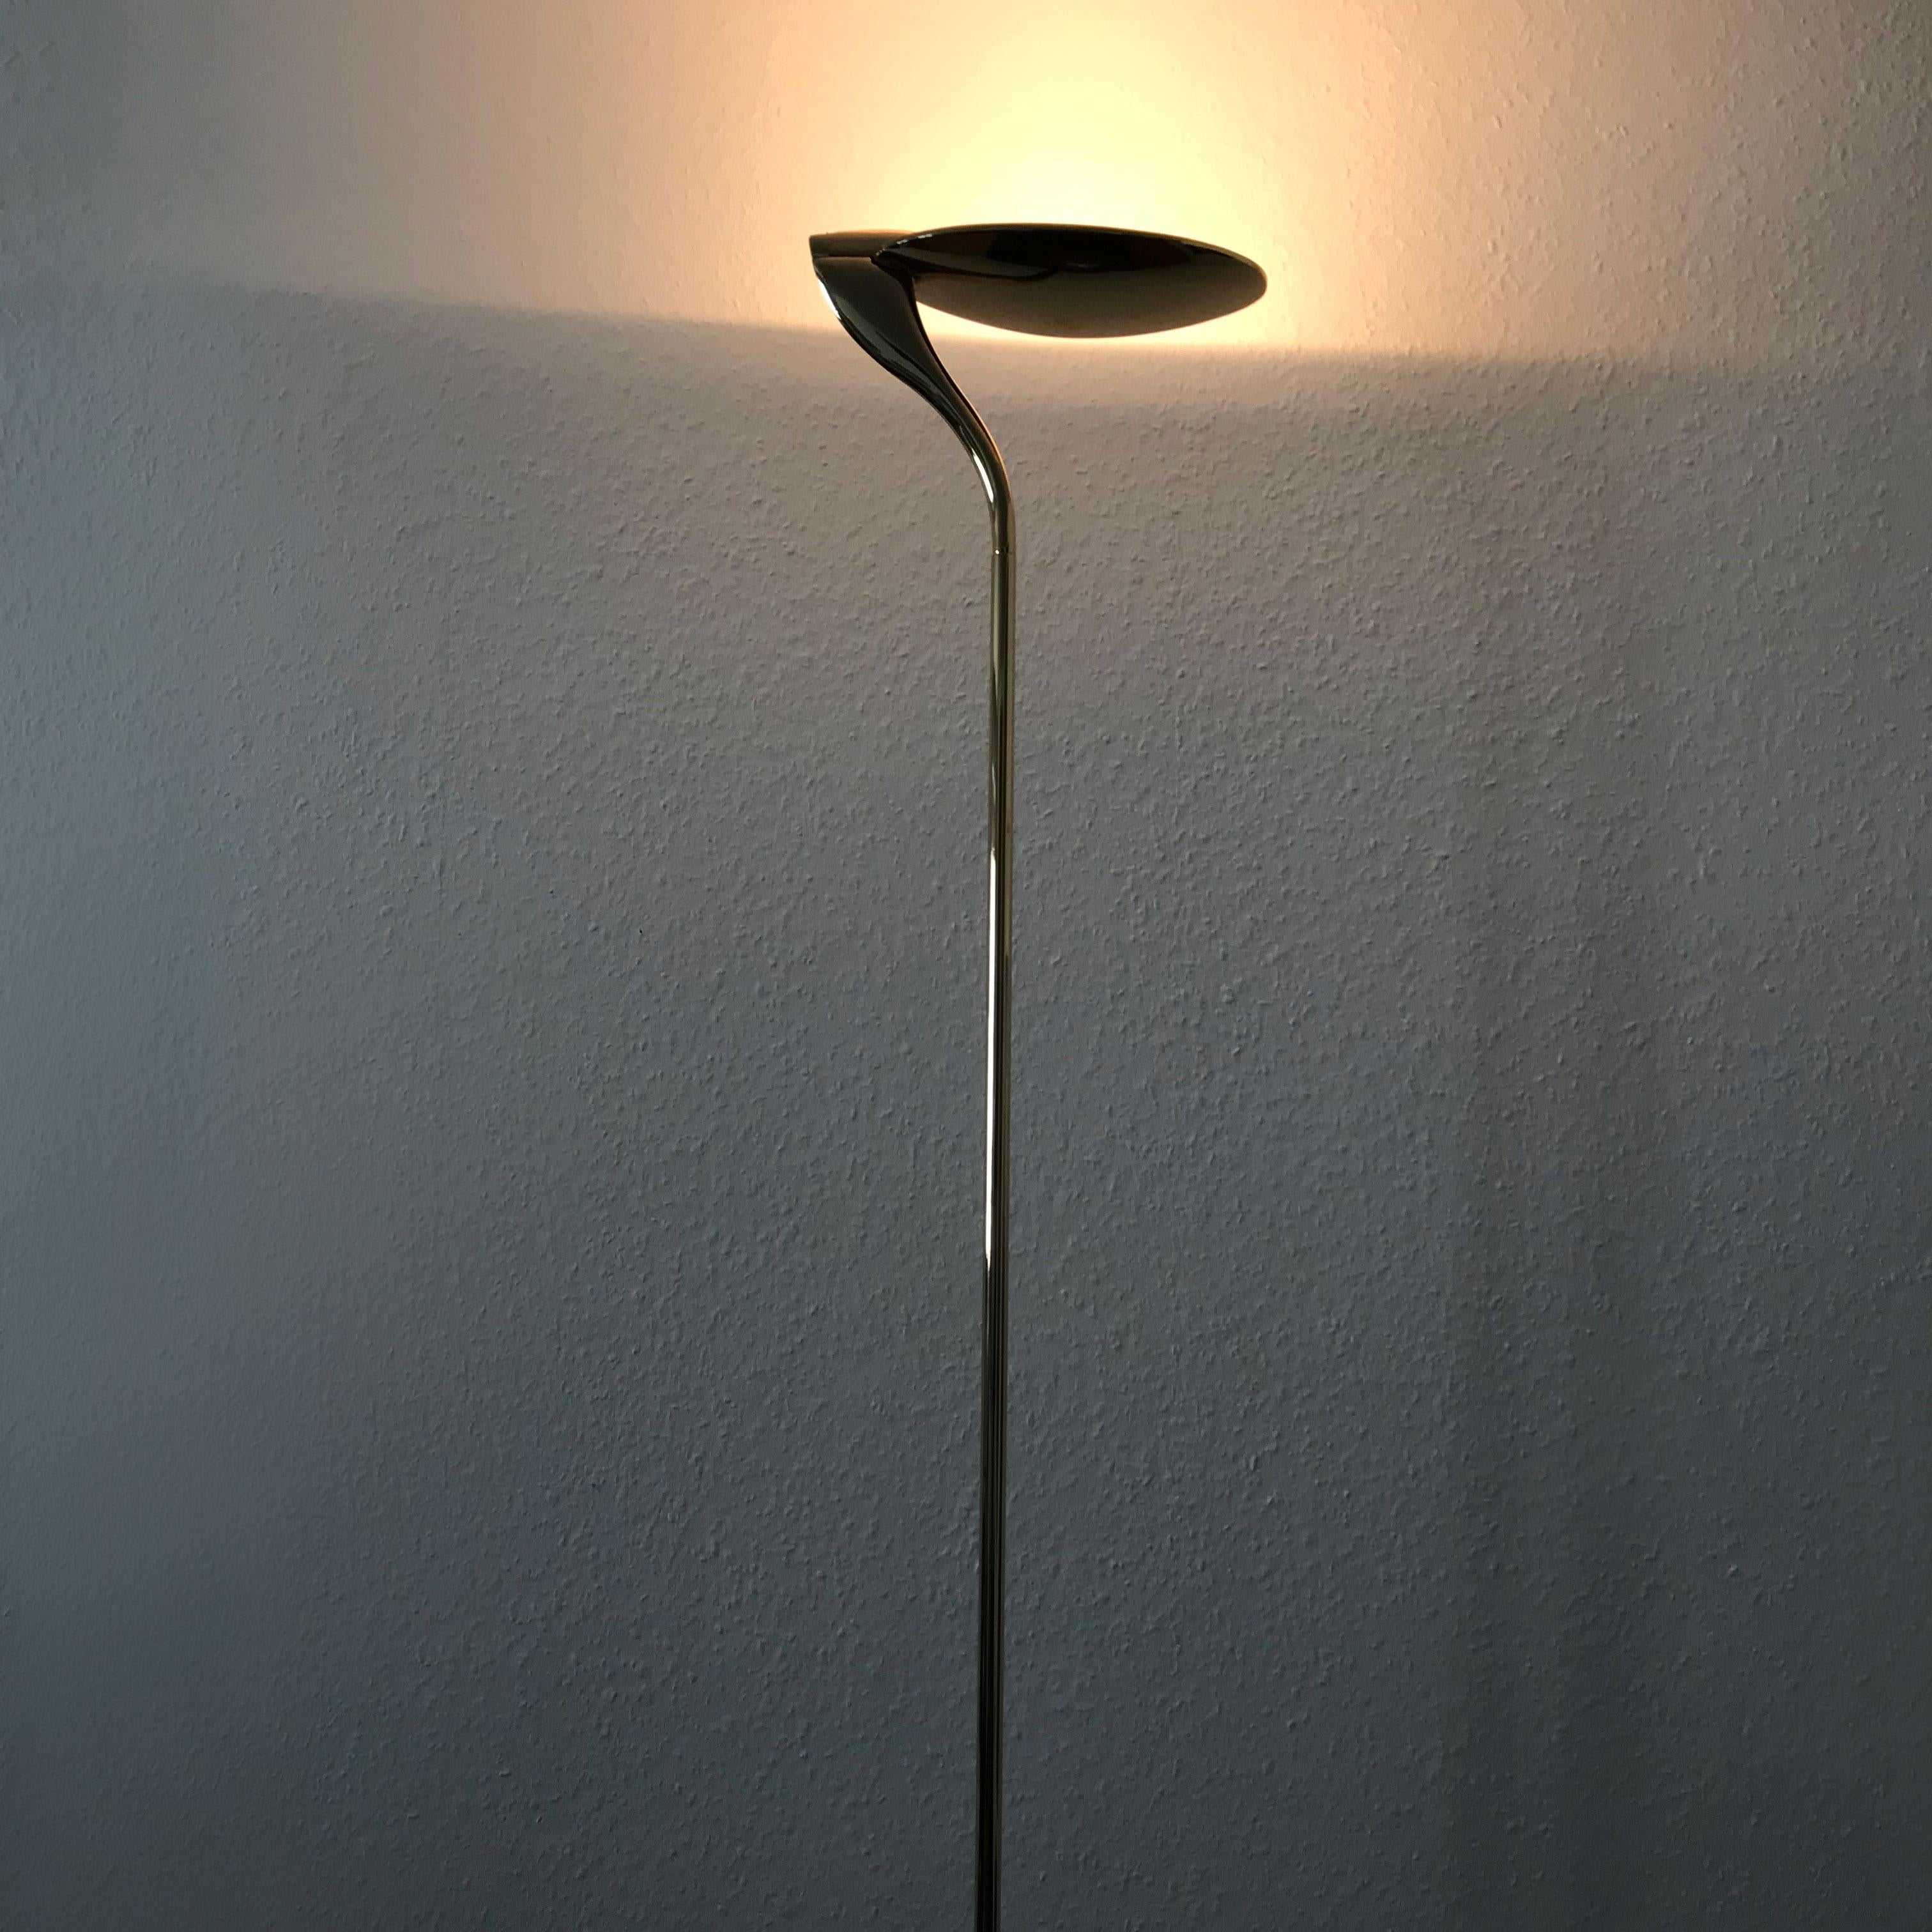 minimalist floor lamp germany amazon